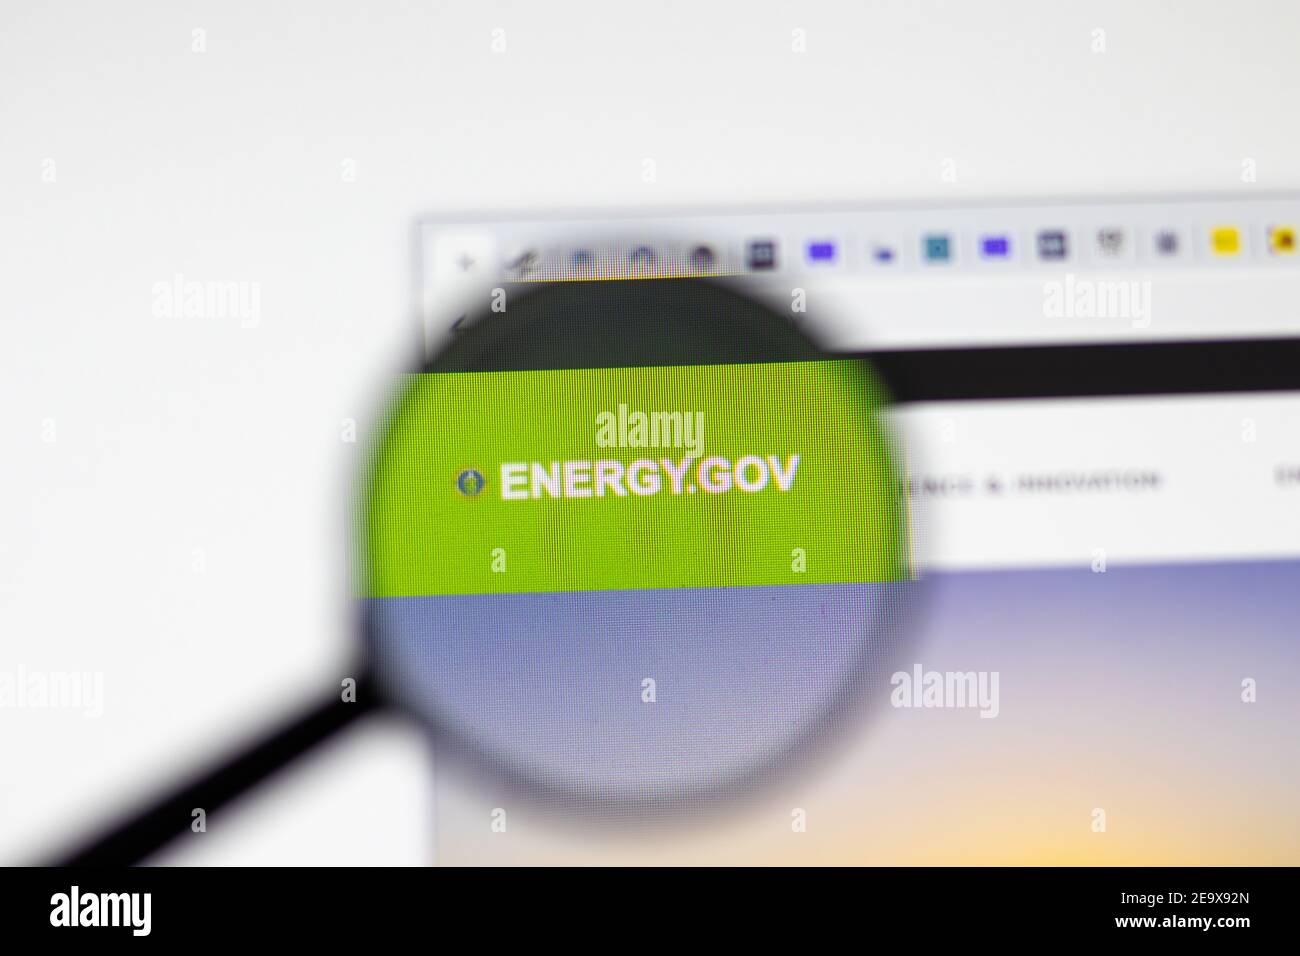 Los Angeles, USA - 1. Februar 2021: WEBSEITE DES US Department of Energy. Energy.gov Logo auf dem Display, illustrative Editorial Stockfoto